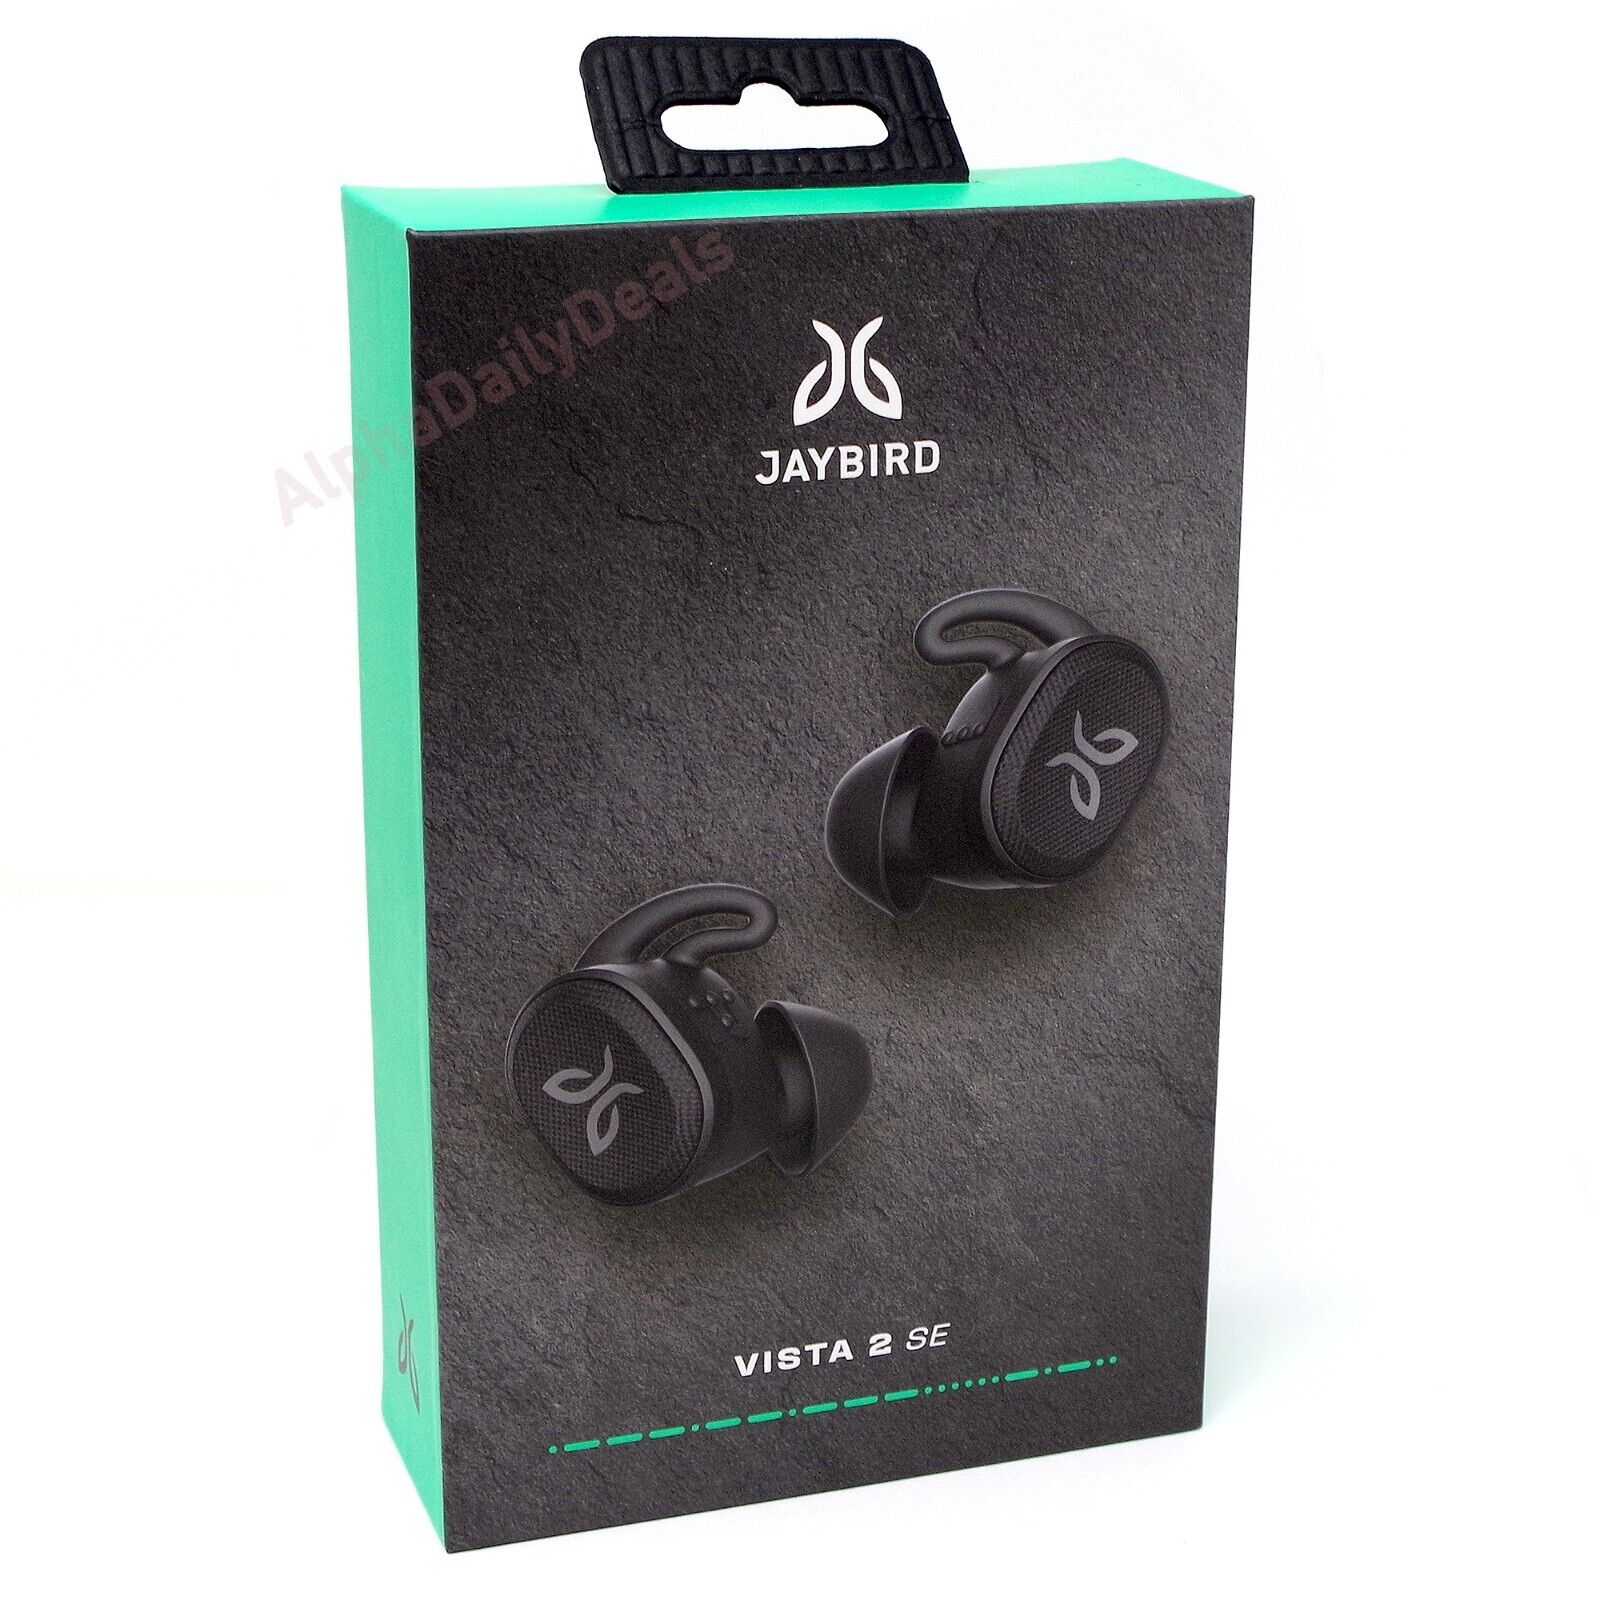 NEW Jaybird Vista 2 SE True Wireless Active Noise Cancelling Sport Earbuds Black